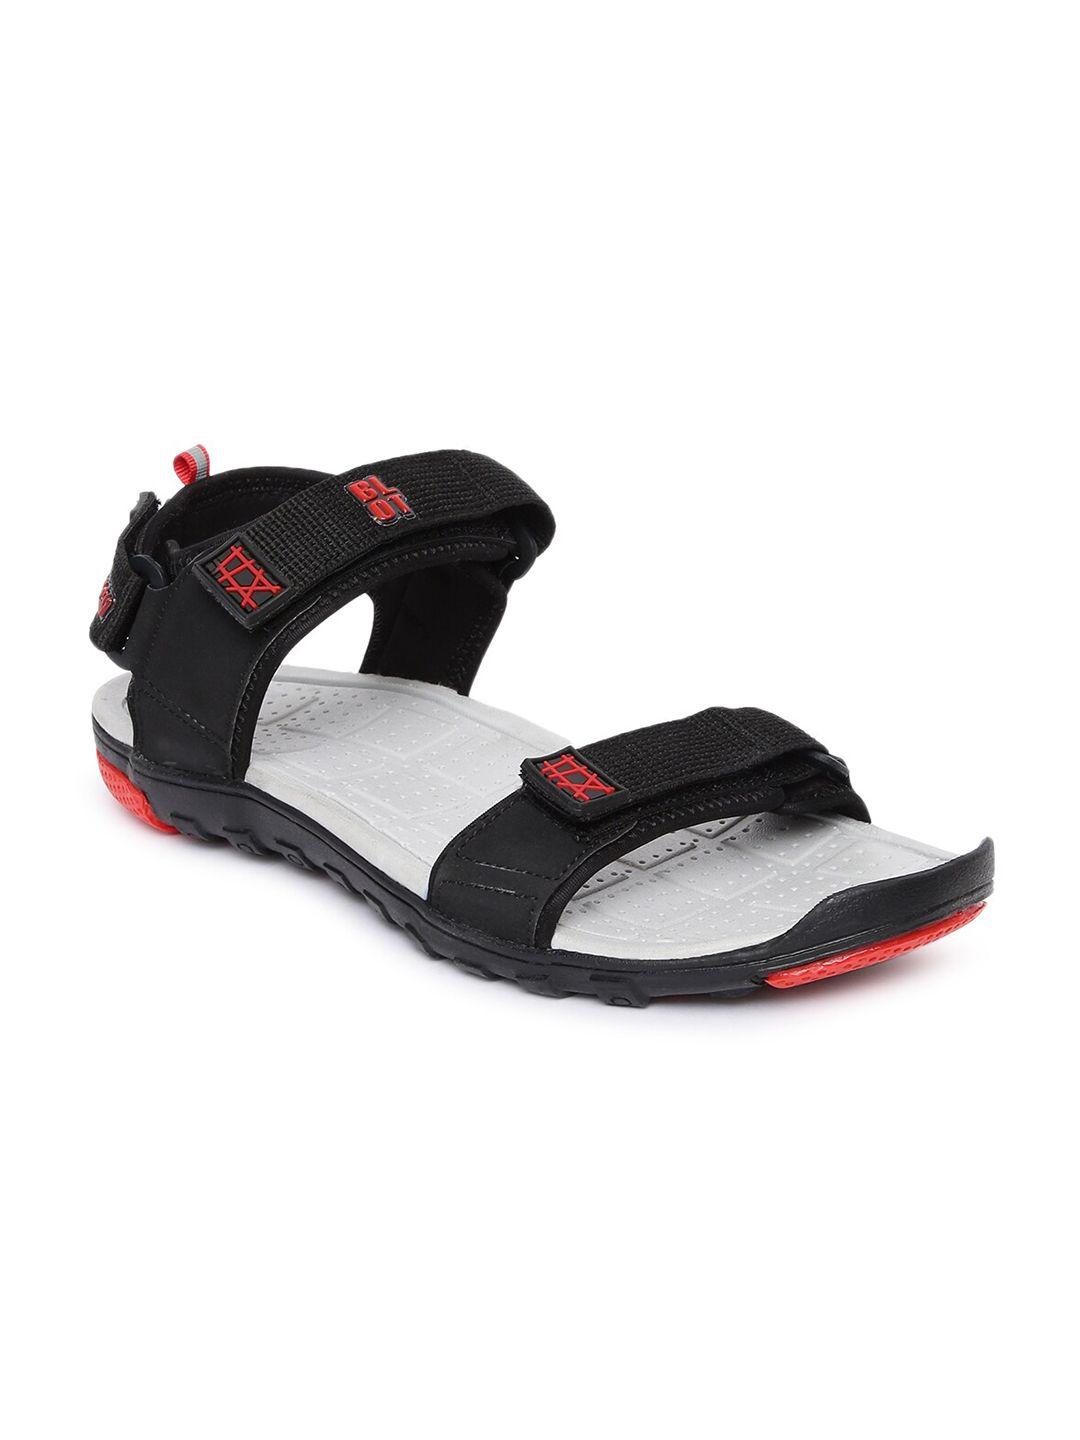 paragon-men-solid-sports-sandals